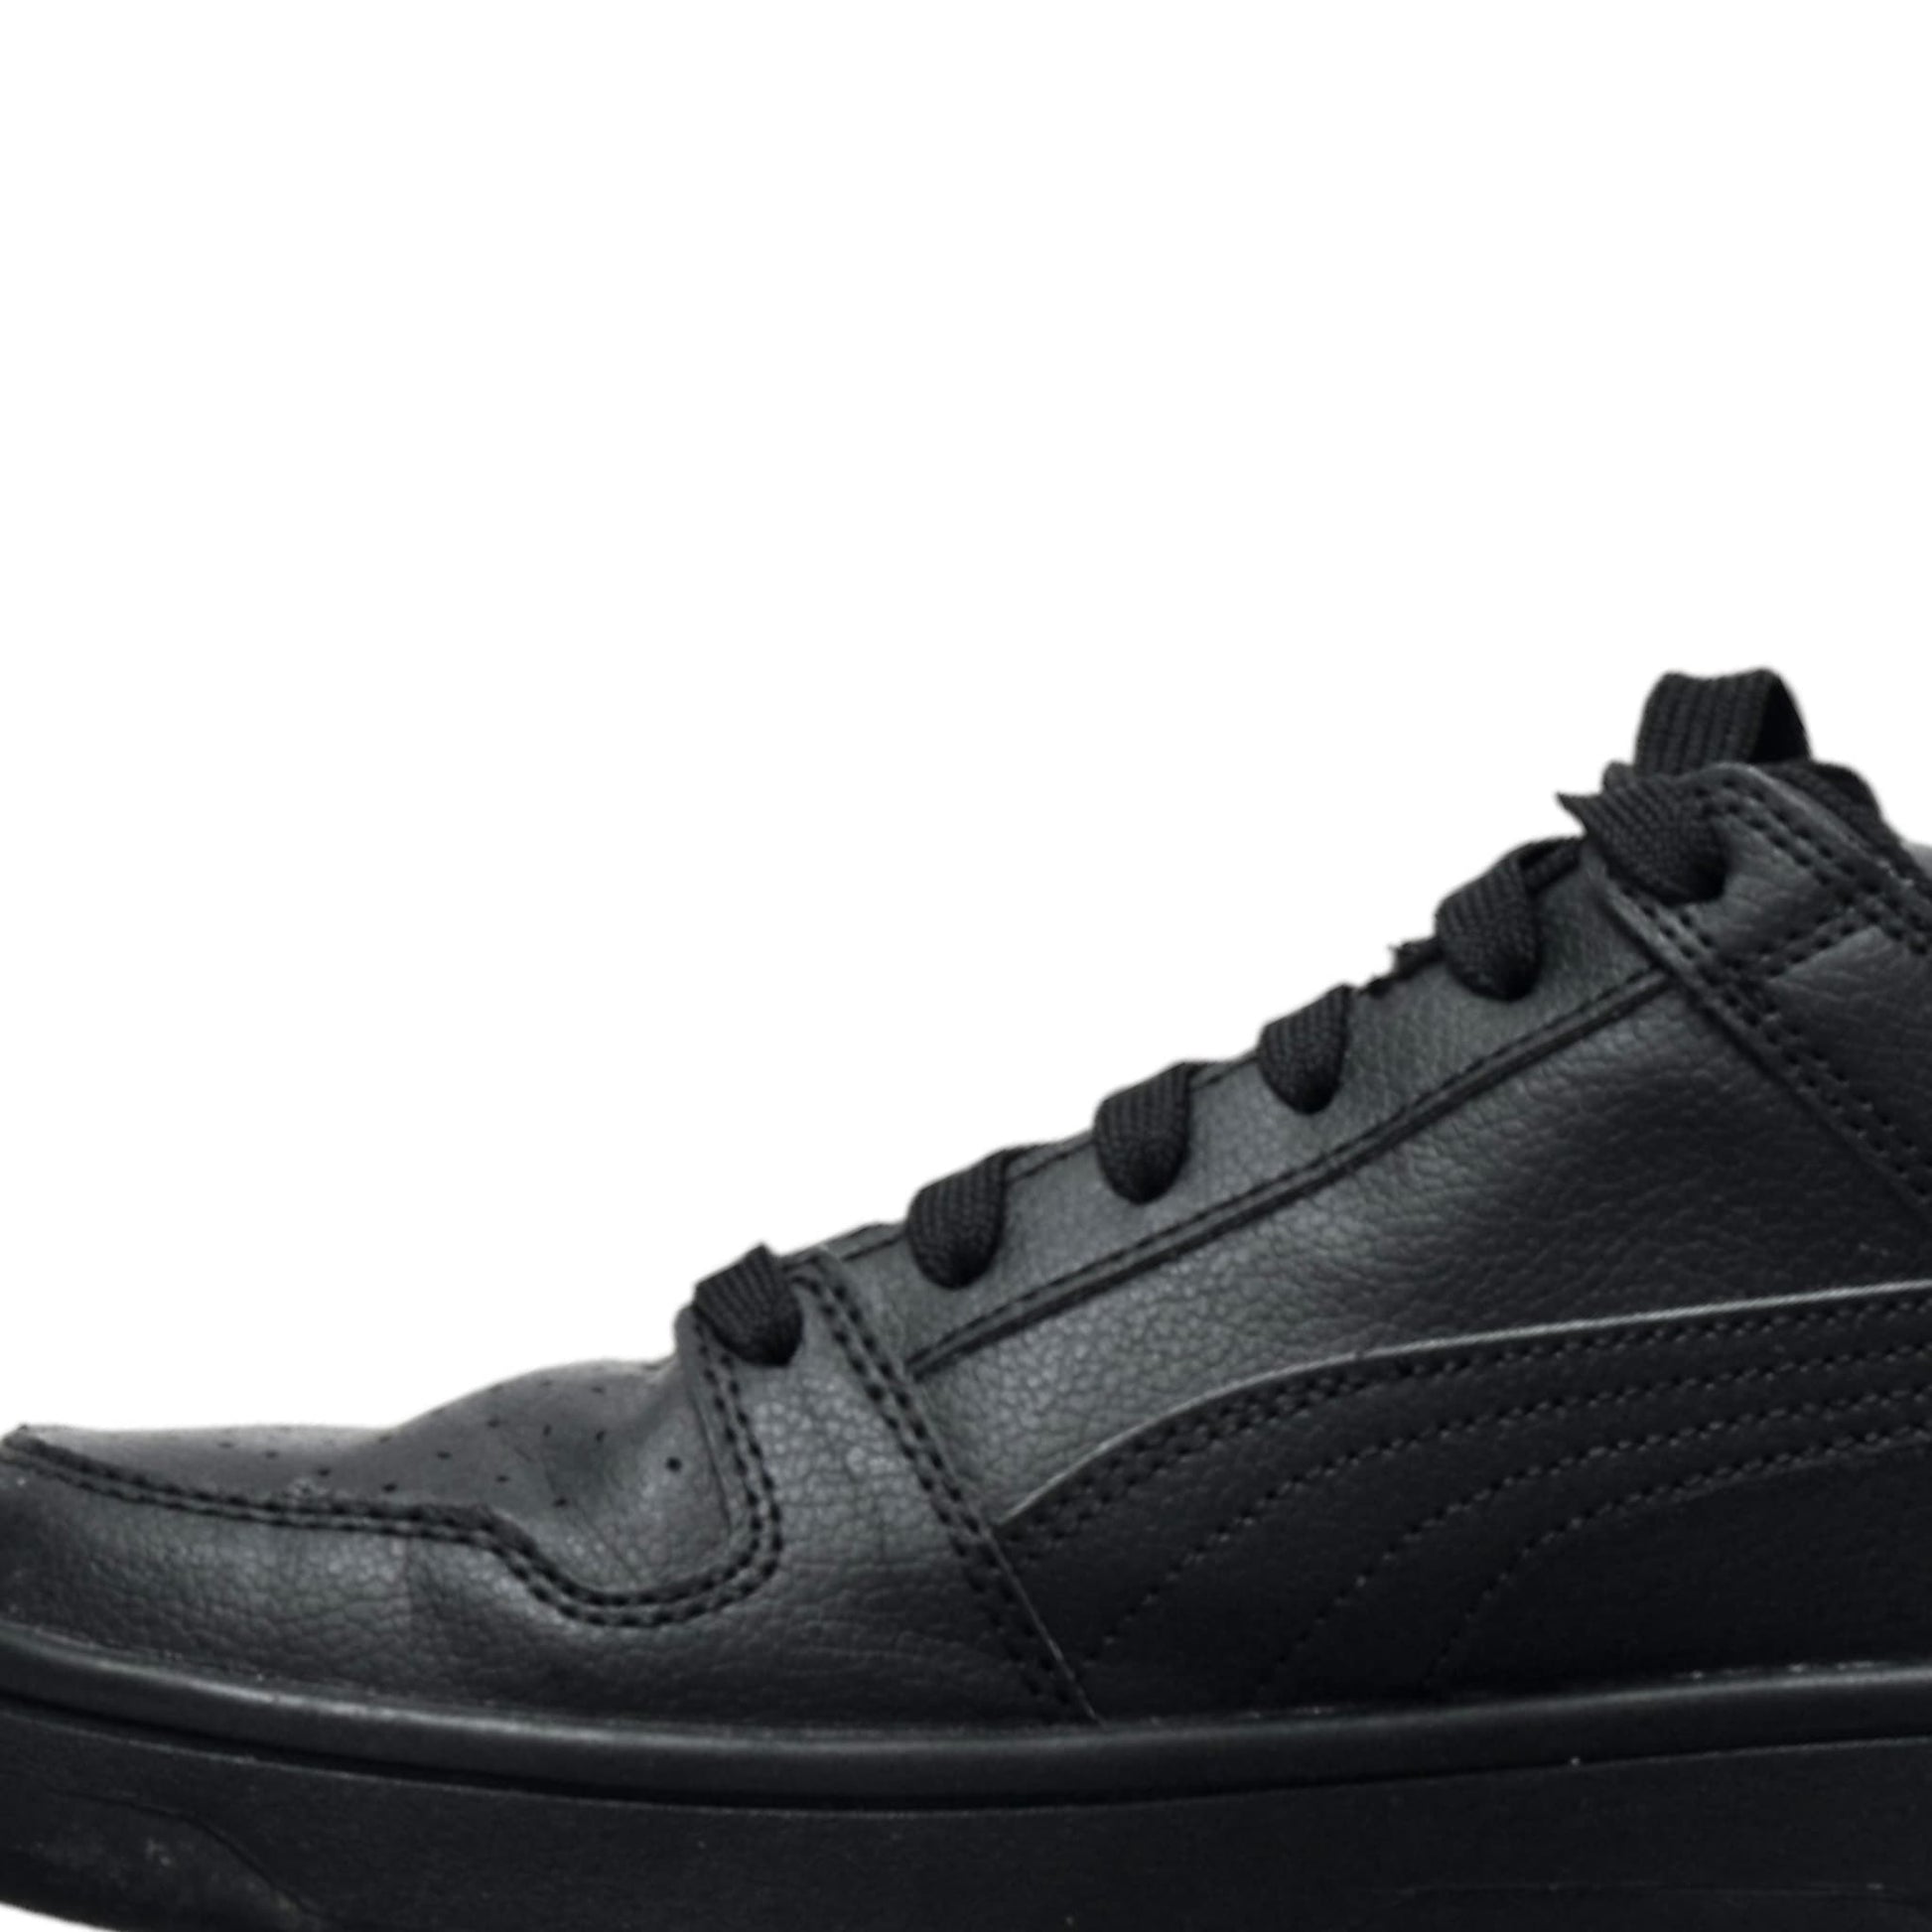 Game Black Shoelaces in a Black Puma Sneaker